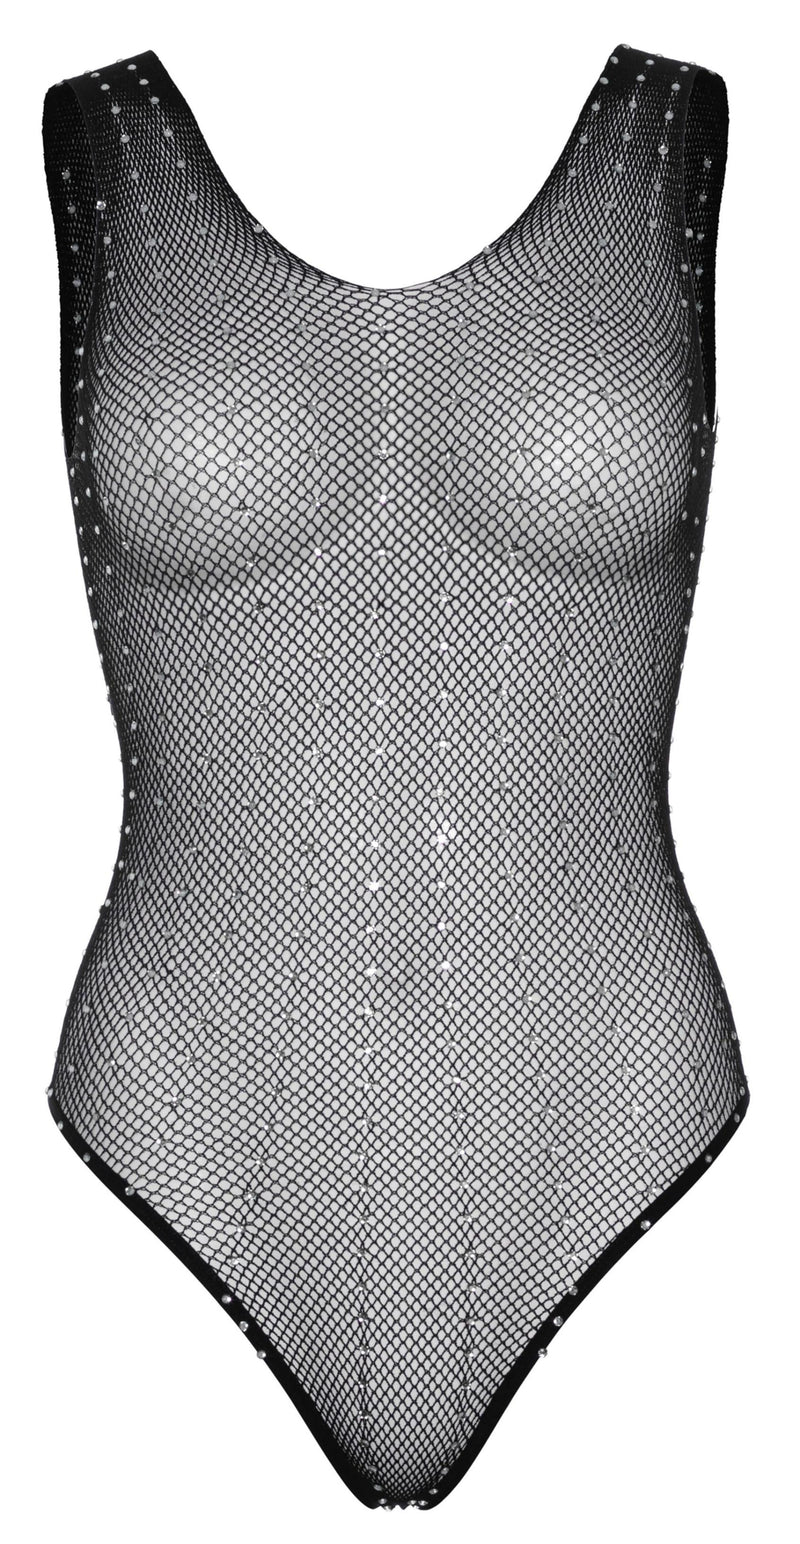 Rhinestone Fishnet Snap Crotch Bodysuit - One Size - Black